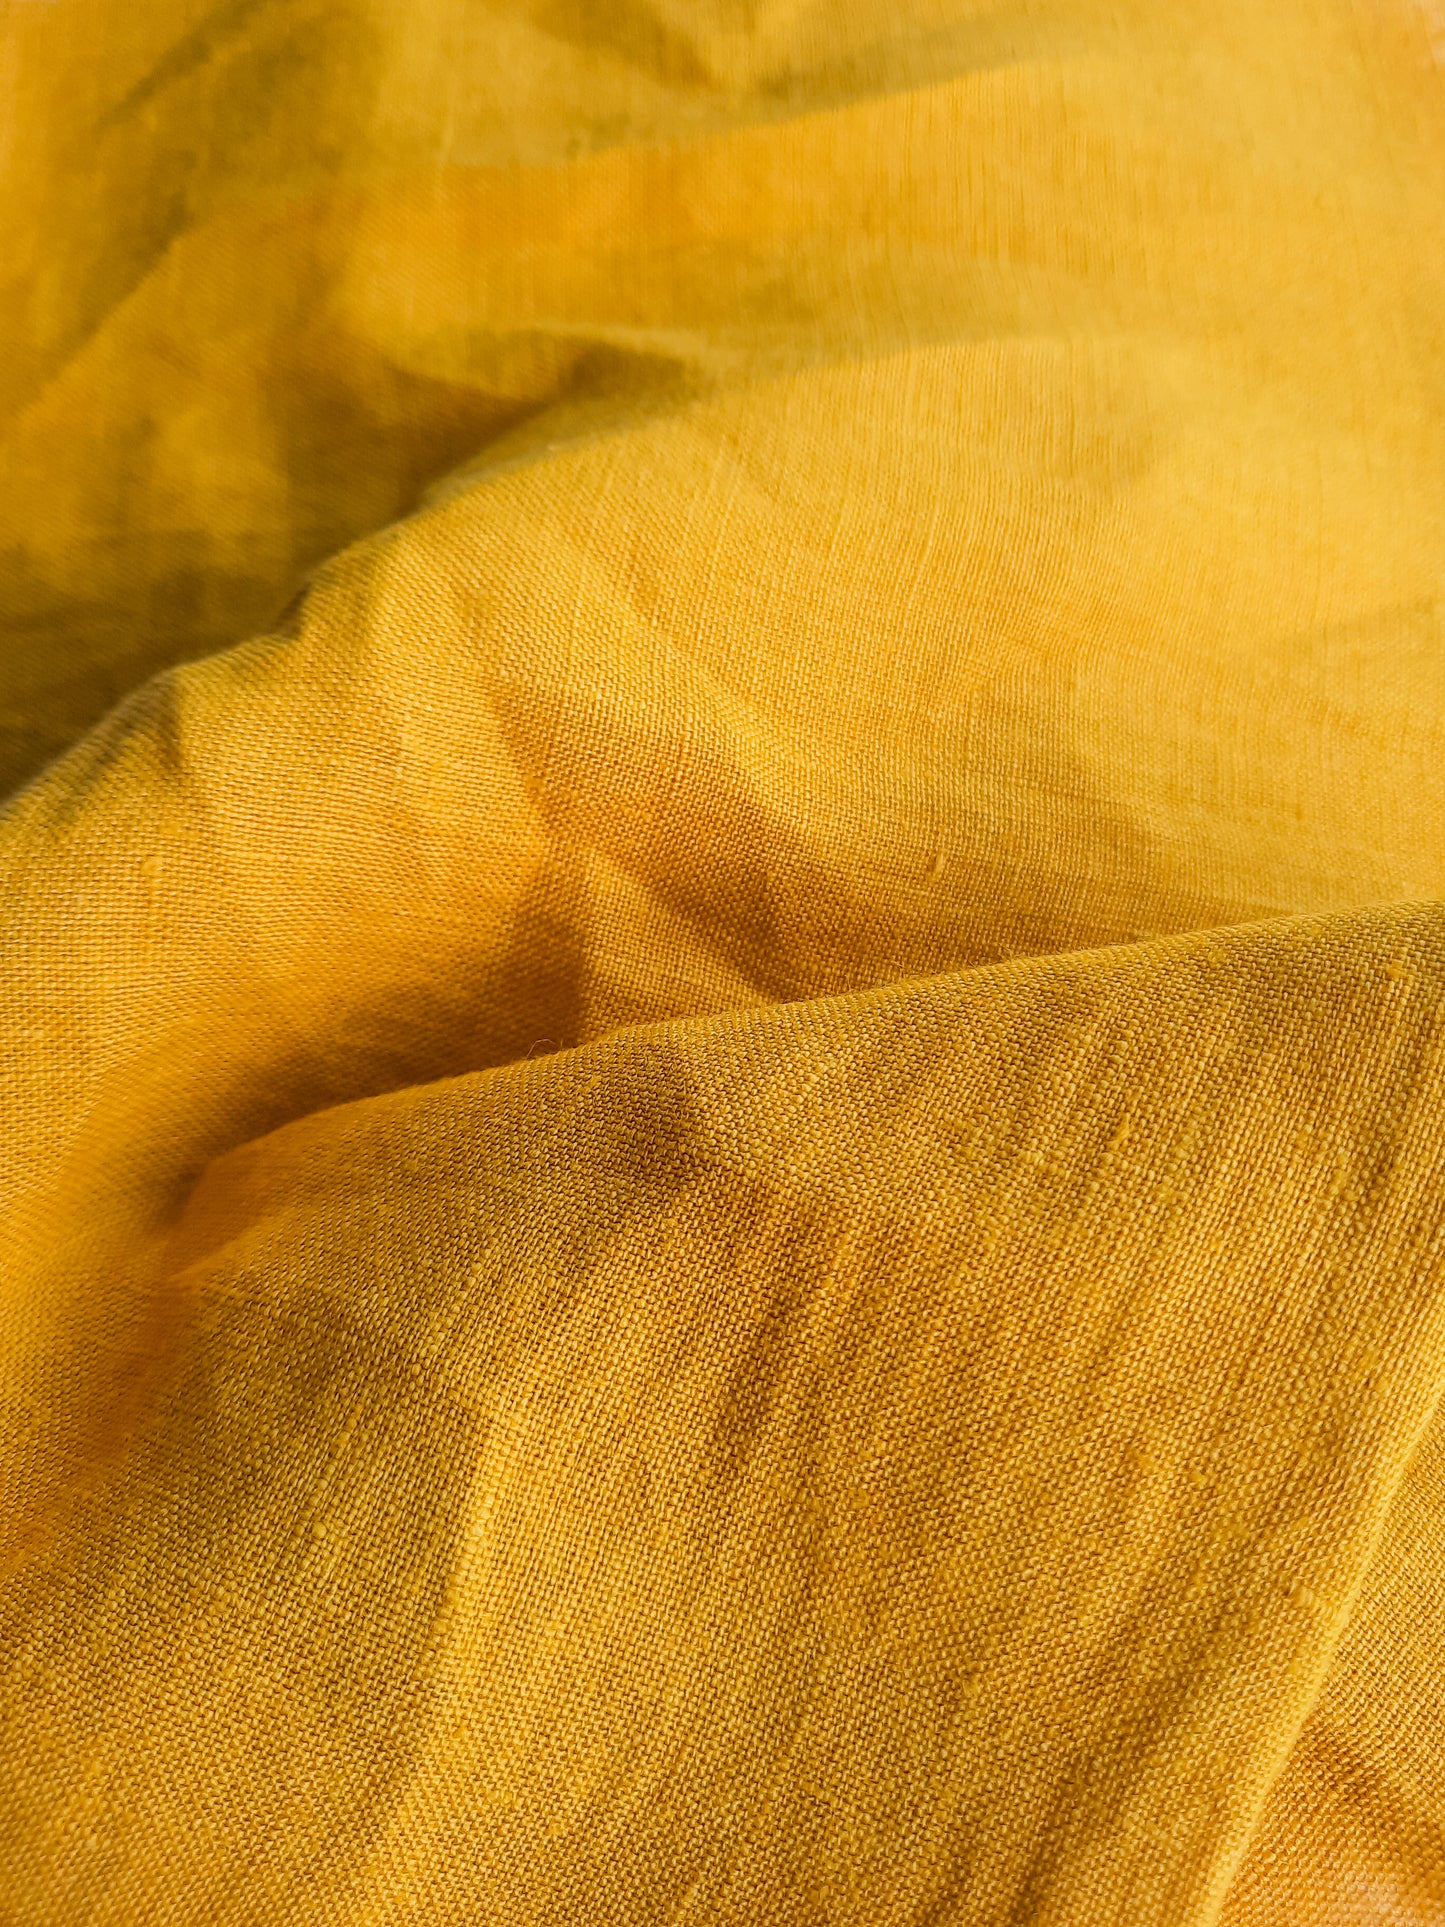 Pre-made Izzy Dress (marigold linen) - size XL